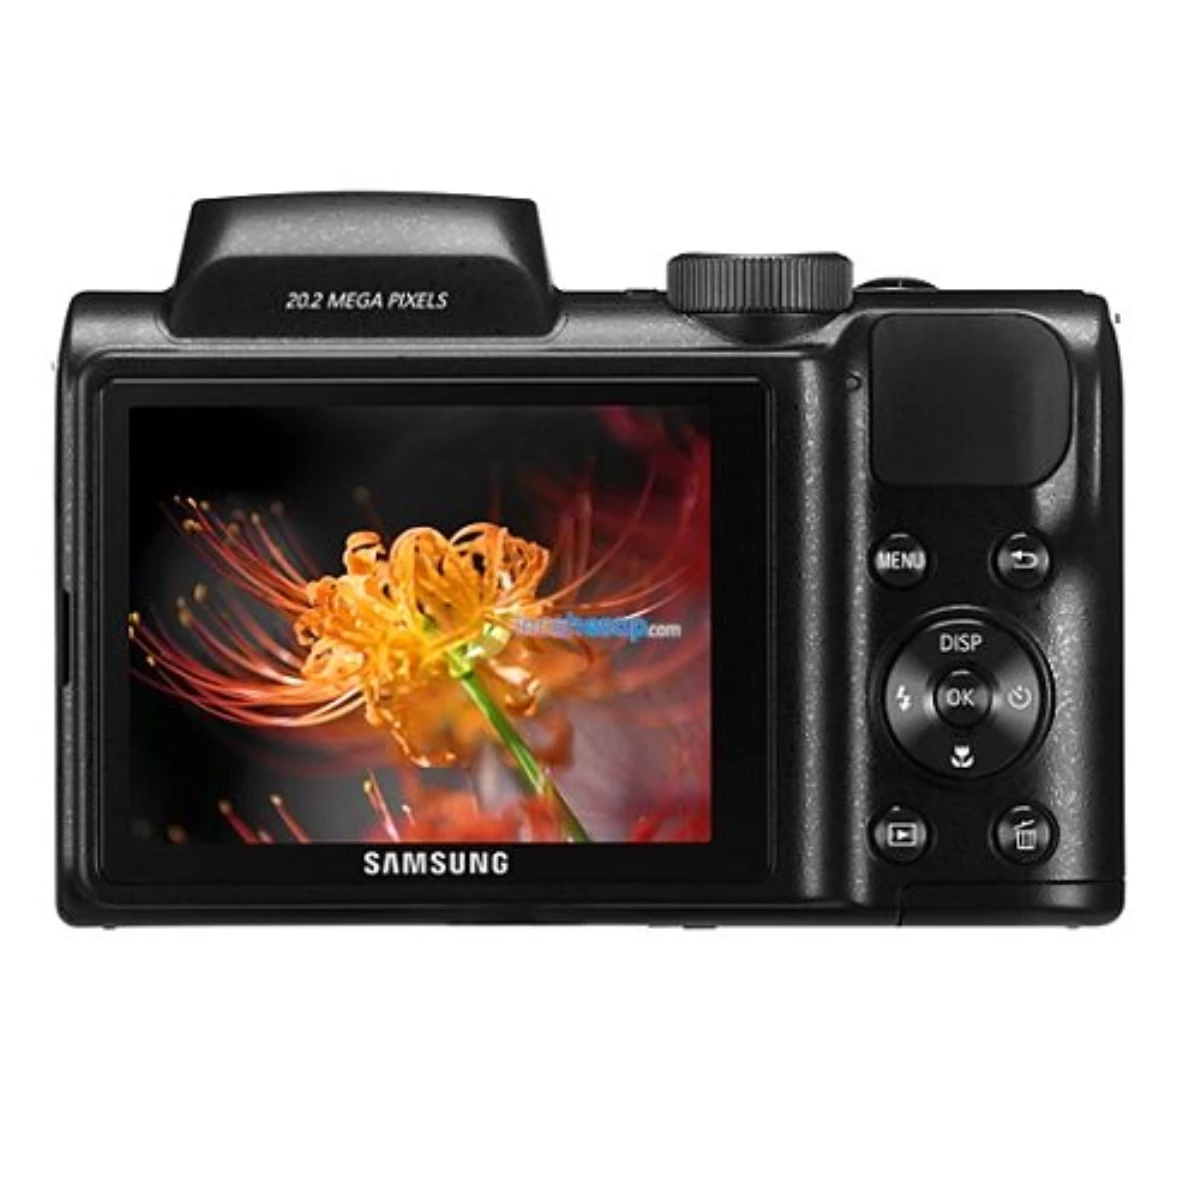 Samsung Wb110 Dijital Fotoğraf Makinesi Siyah